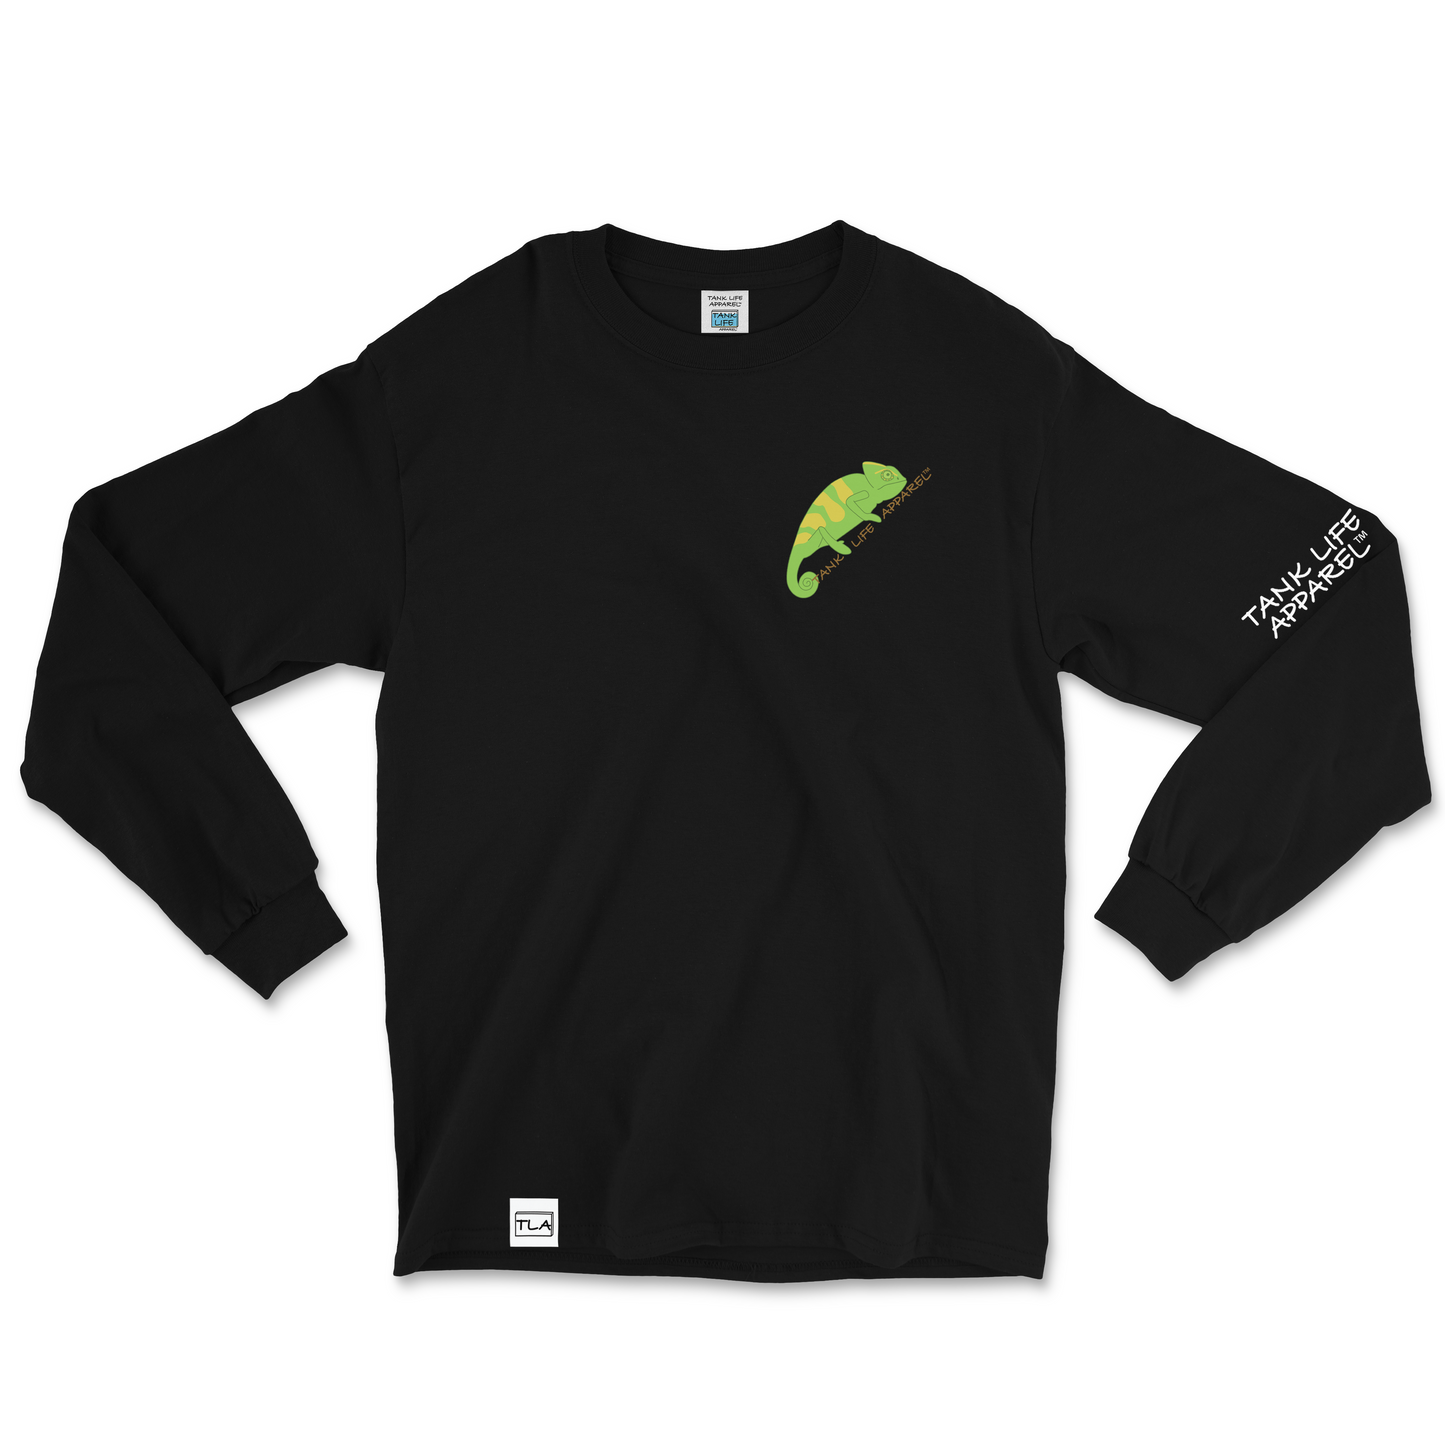 The Tank Life Apparel veiled chameleon design on a super comfortable long sleeve shirt. Green chameleon reptile shirt.